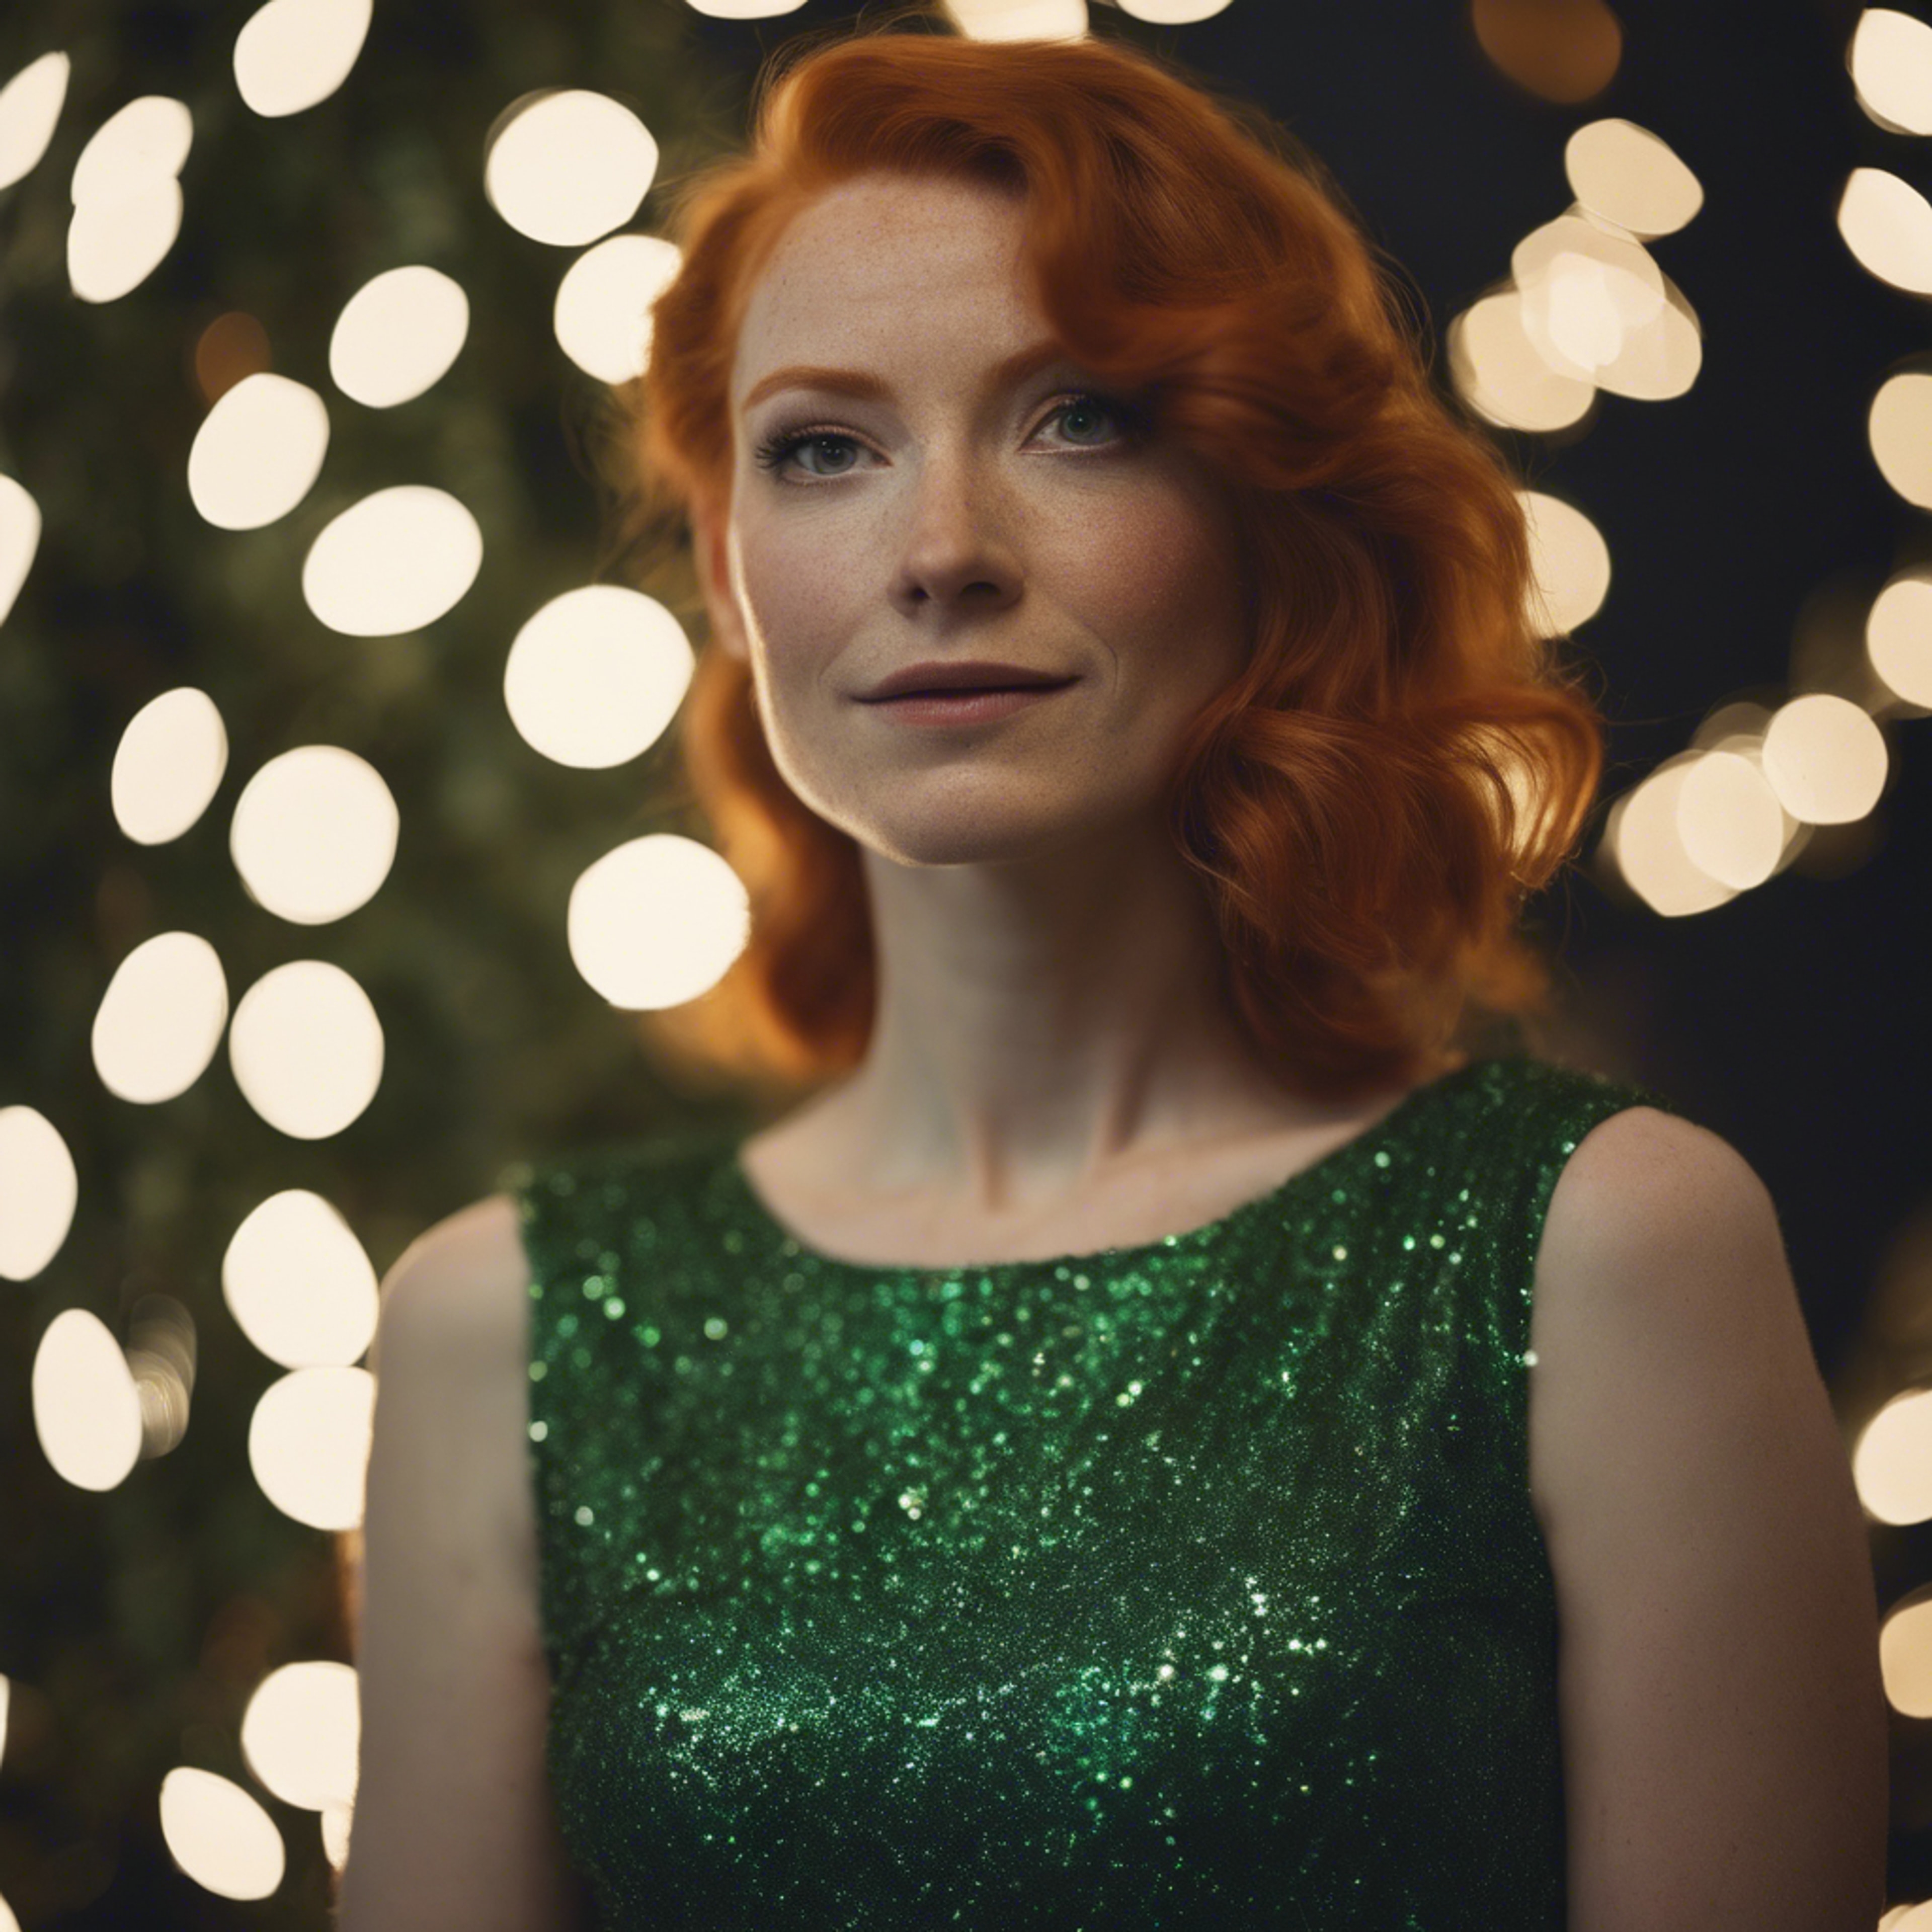 A redheaded woman wearing a sparkly green dress at a Christmas party Fondo de pantalla[a7aea6b7222f4d2facc9]